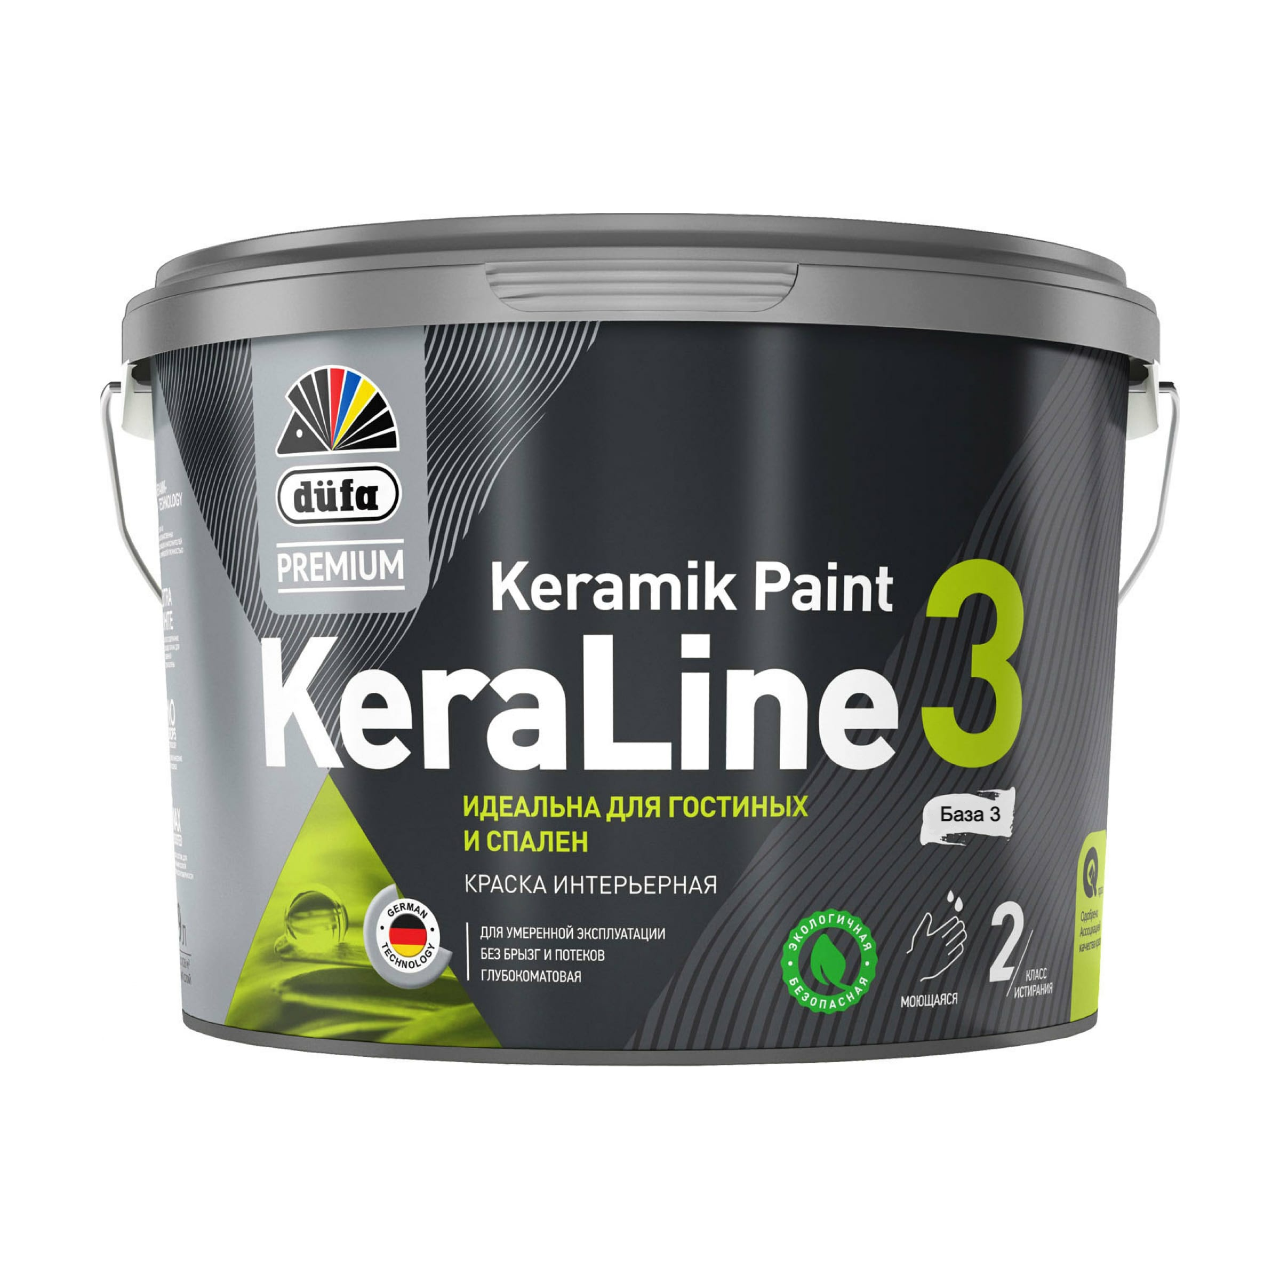 90190612 Краска для стен и потолков Premium KeraLine Keramik Paint 3 глубокоматовая прозрачная база 3 9 л STLM-0126763 DUFA